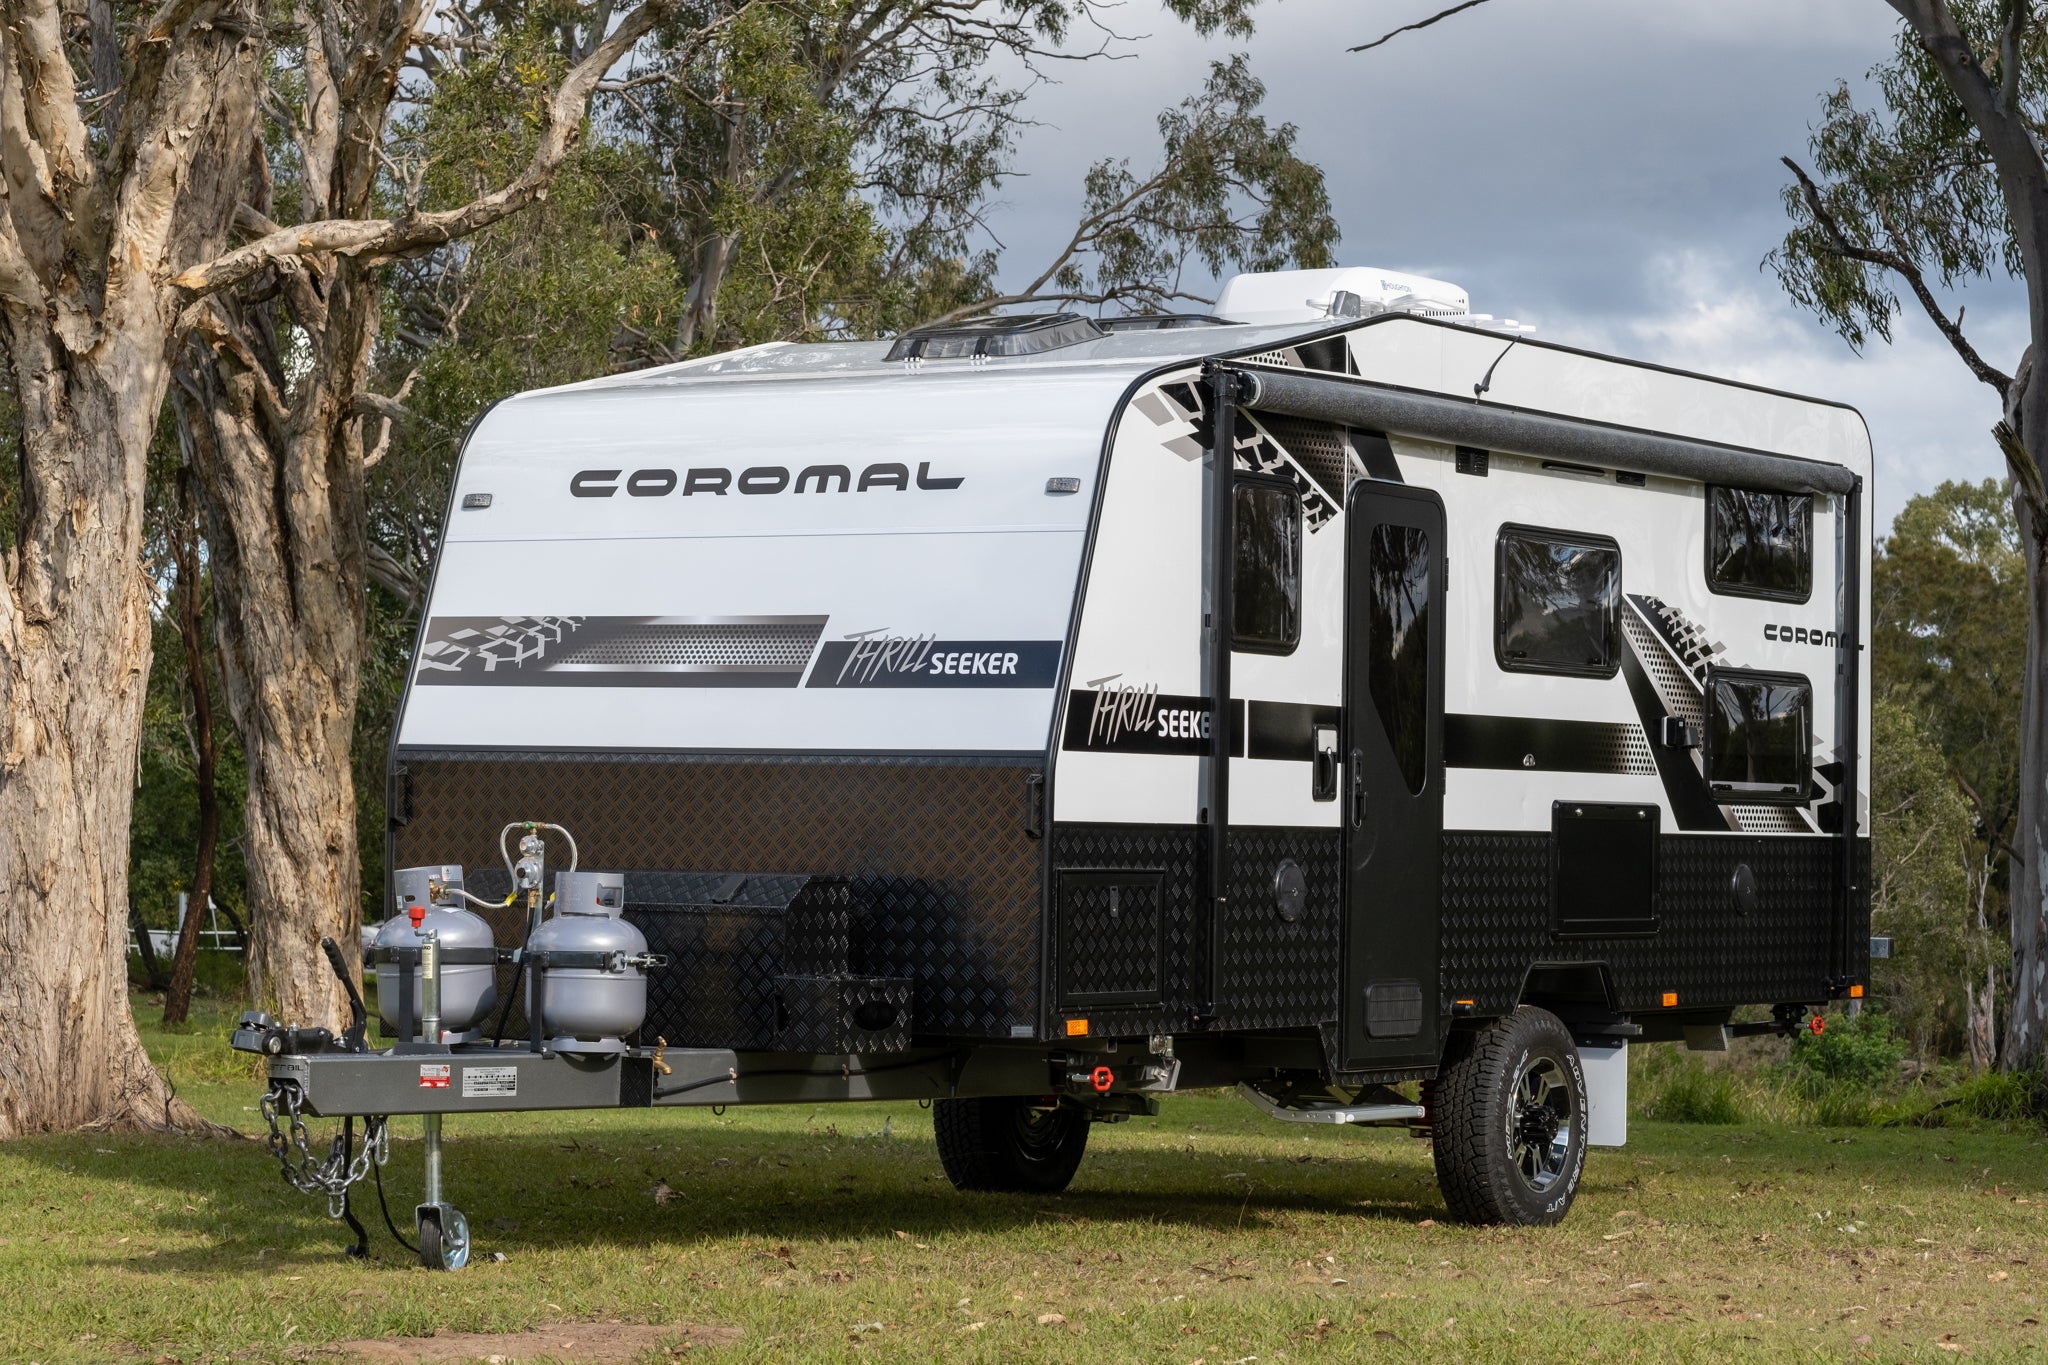 Coromal Thrill Seeker 18'6 Family caravan with gas bottles